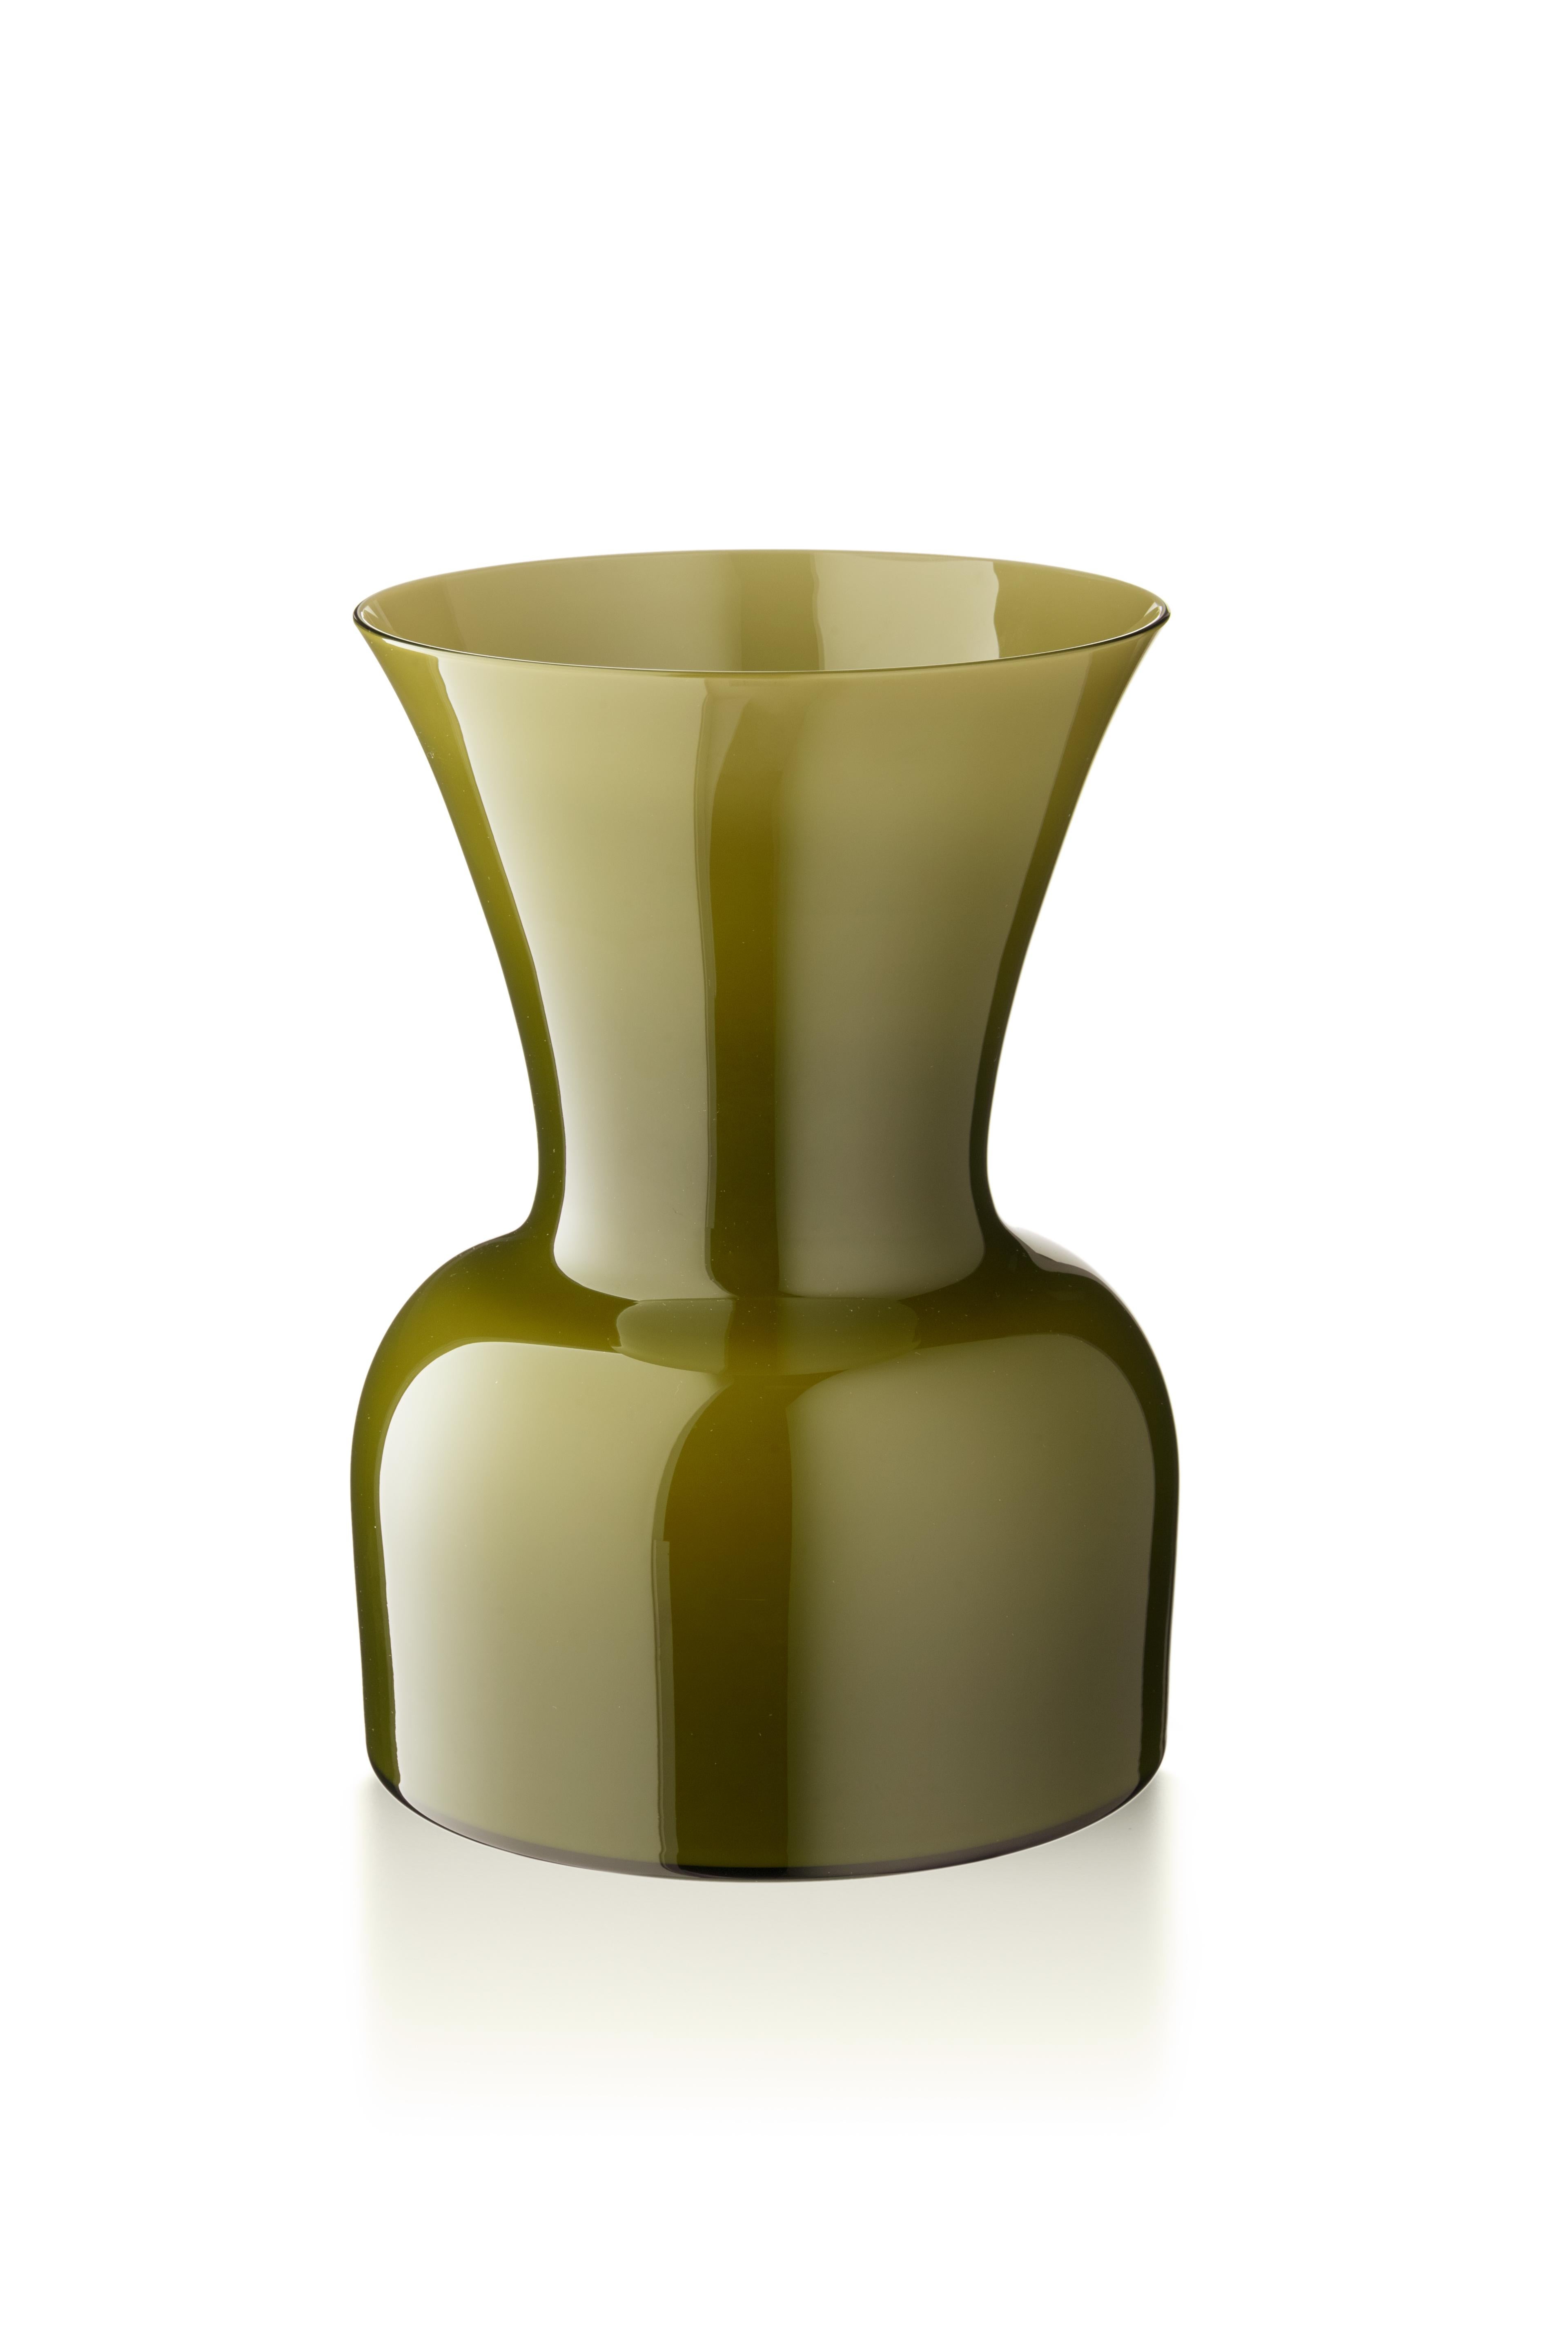 Green (10045) Large Profili Daisy Murano Glass Vase by Anna Gili